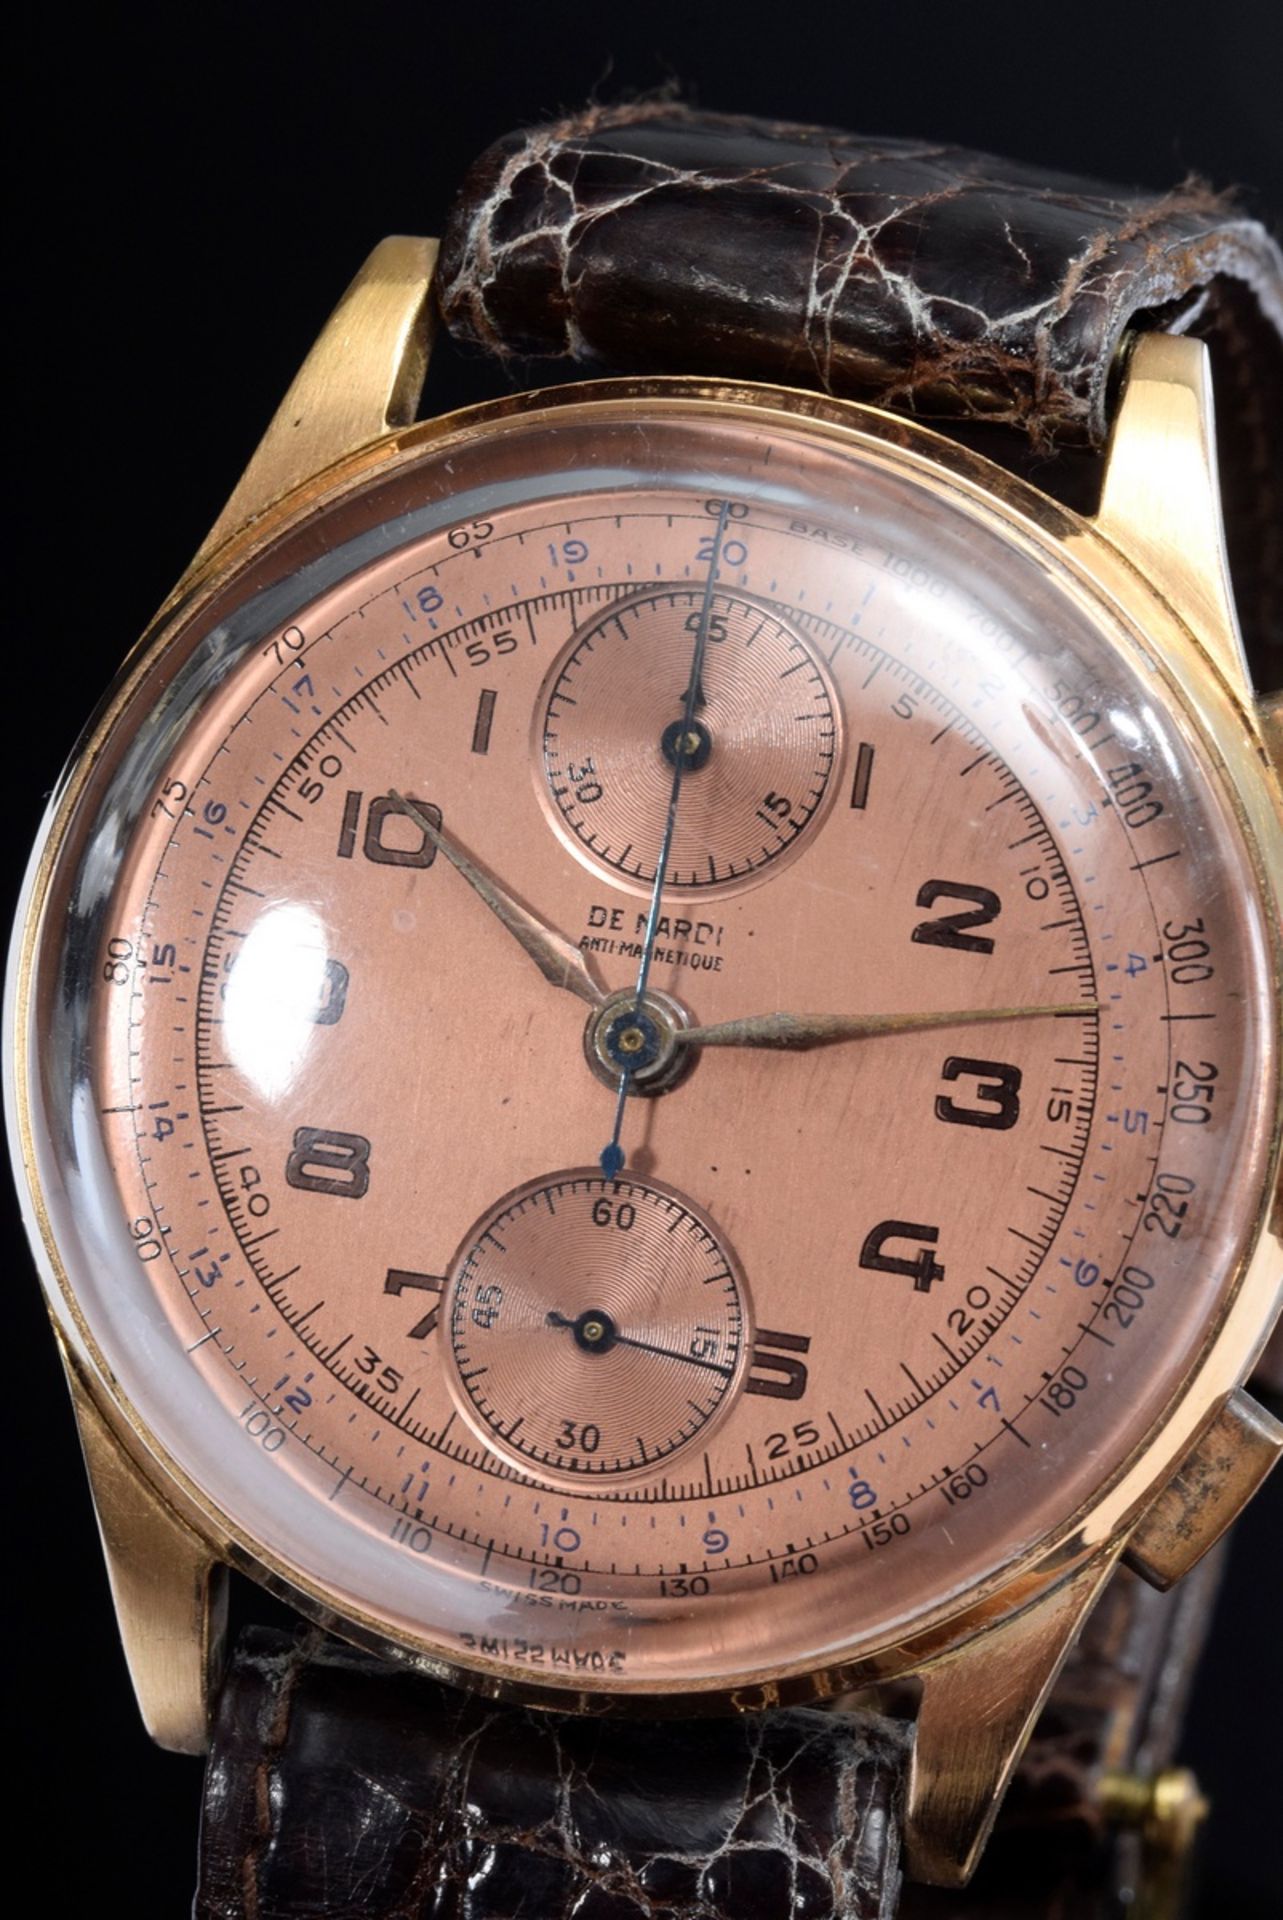 RG 750 "DE NARDE" Herrenarmbanduhr, Chronograph, | RG 750 "DE NARDE" men's wristwatch, chronograph, - Bild 2 aus 5